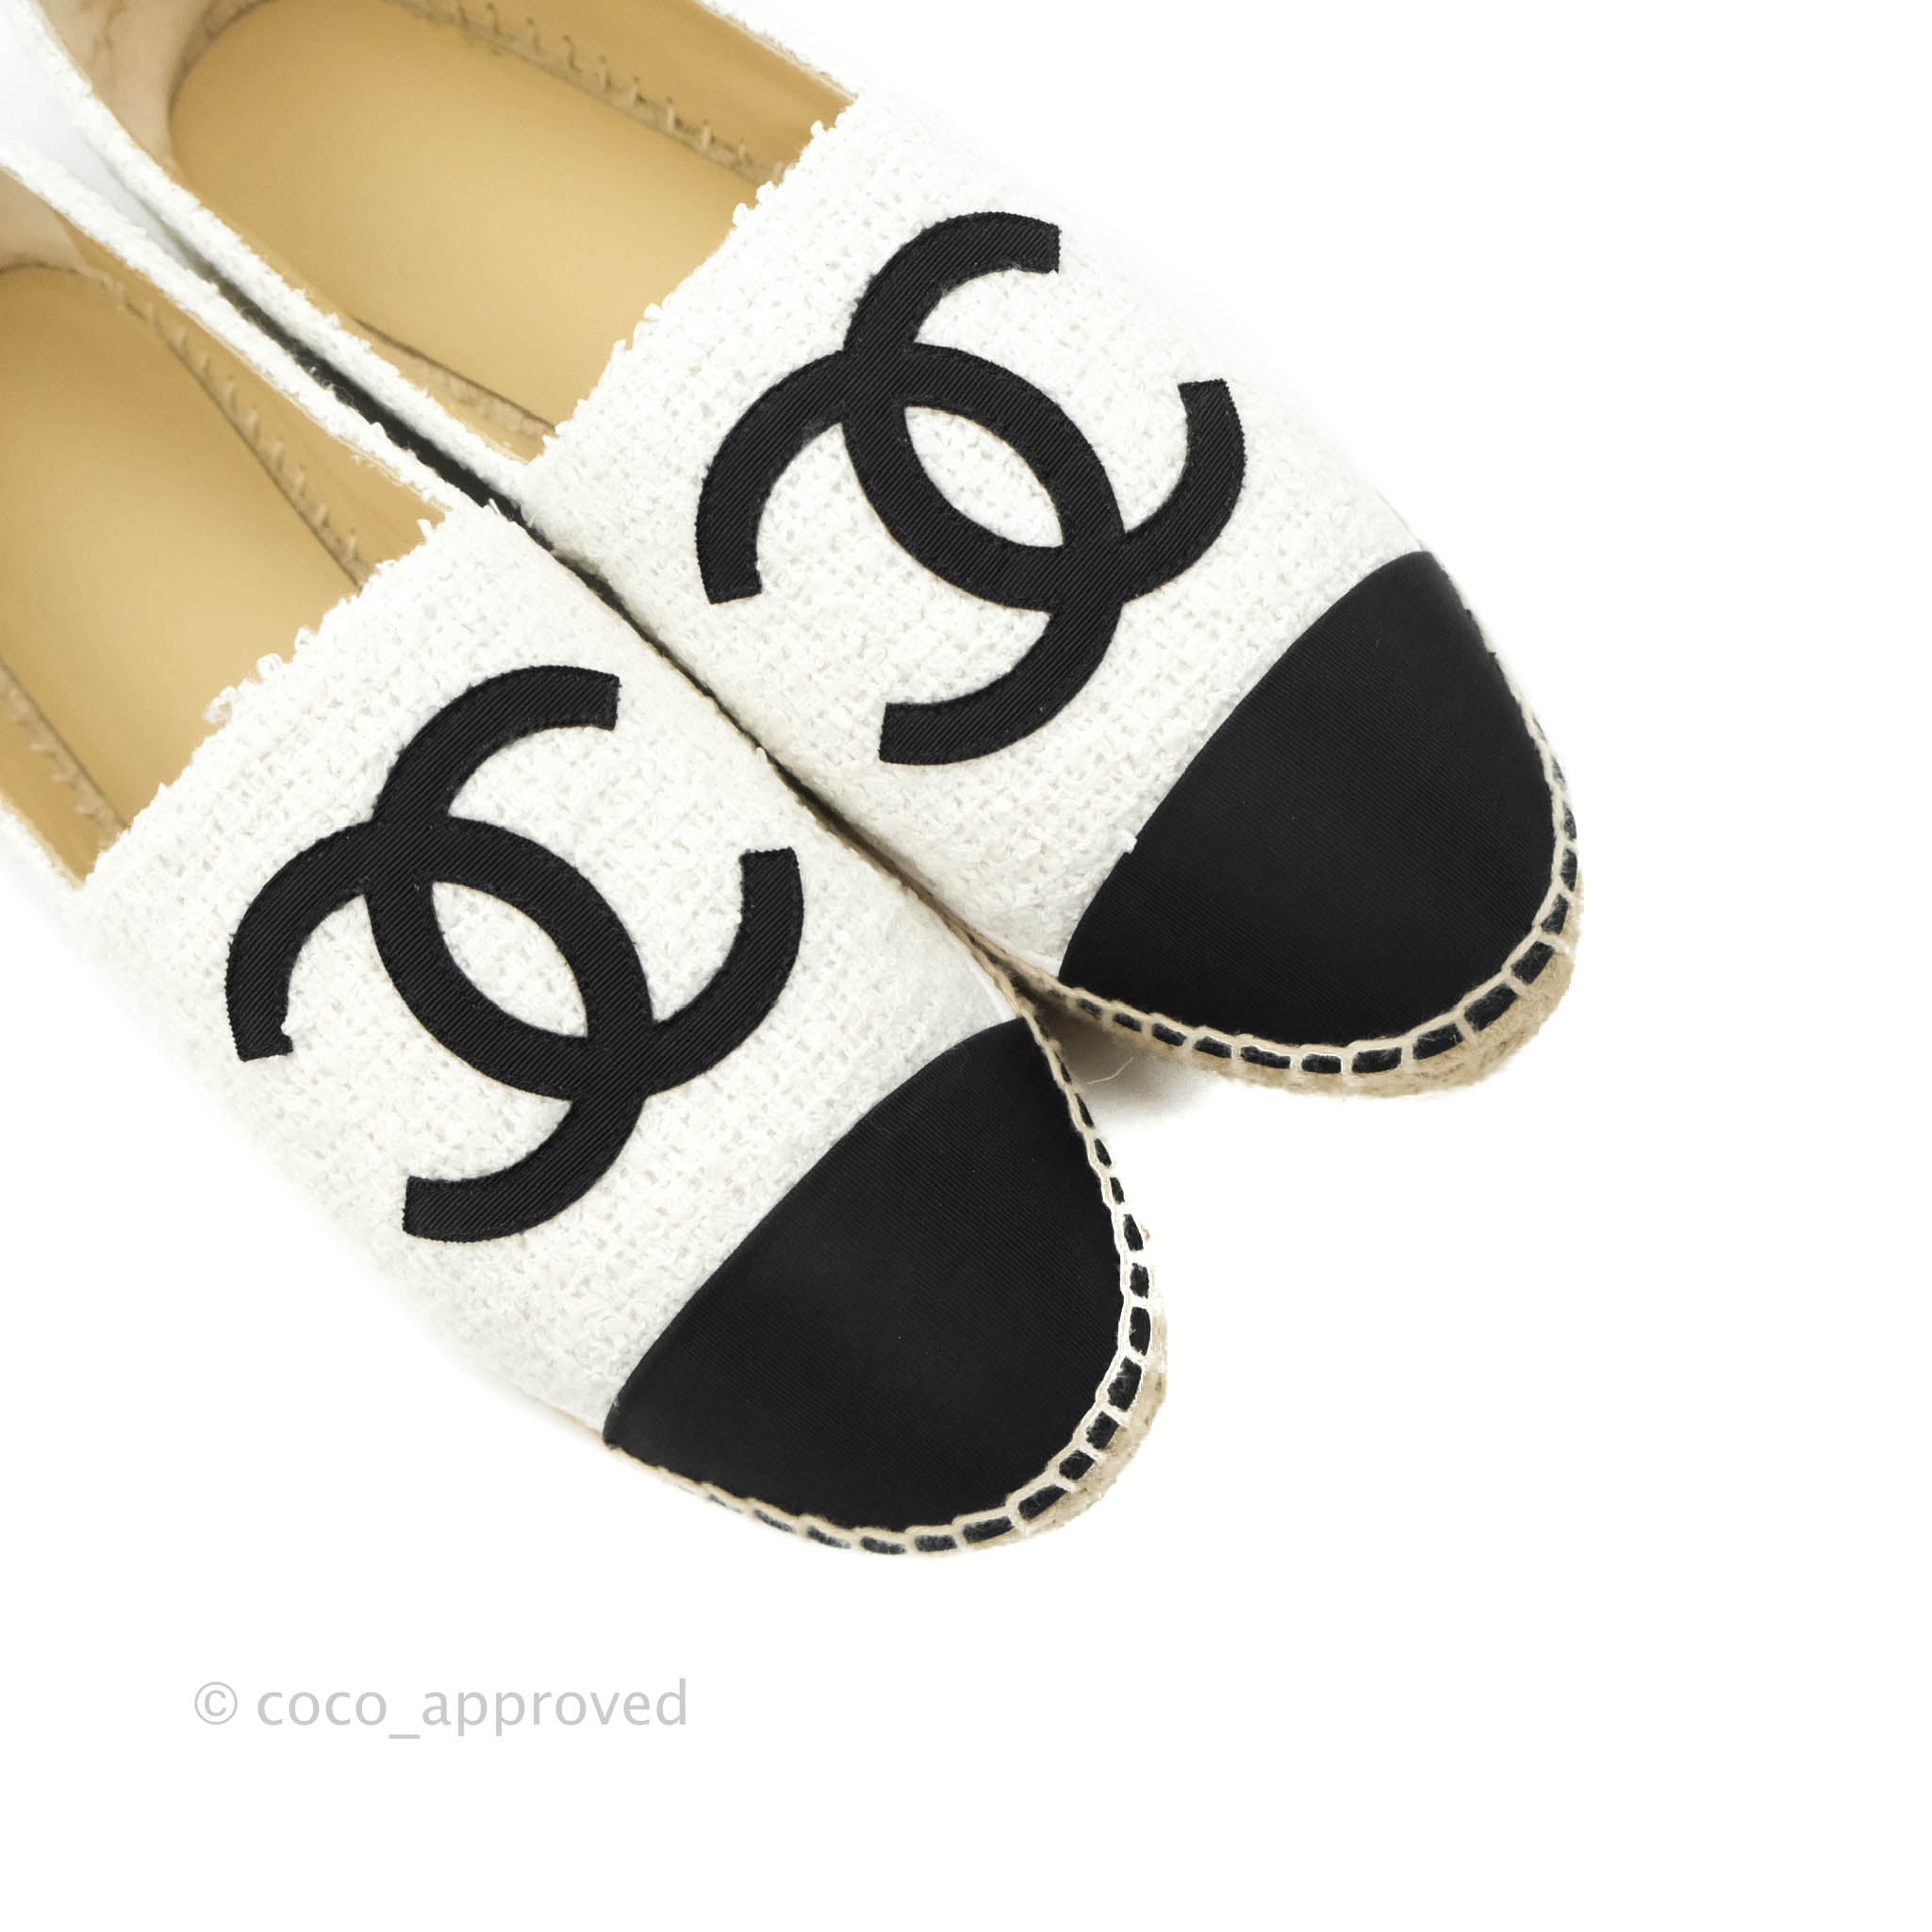 10 Best Chanel Espadrilles 2022 Timeless Chanel Sandals for Summer